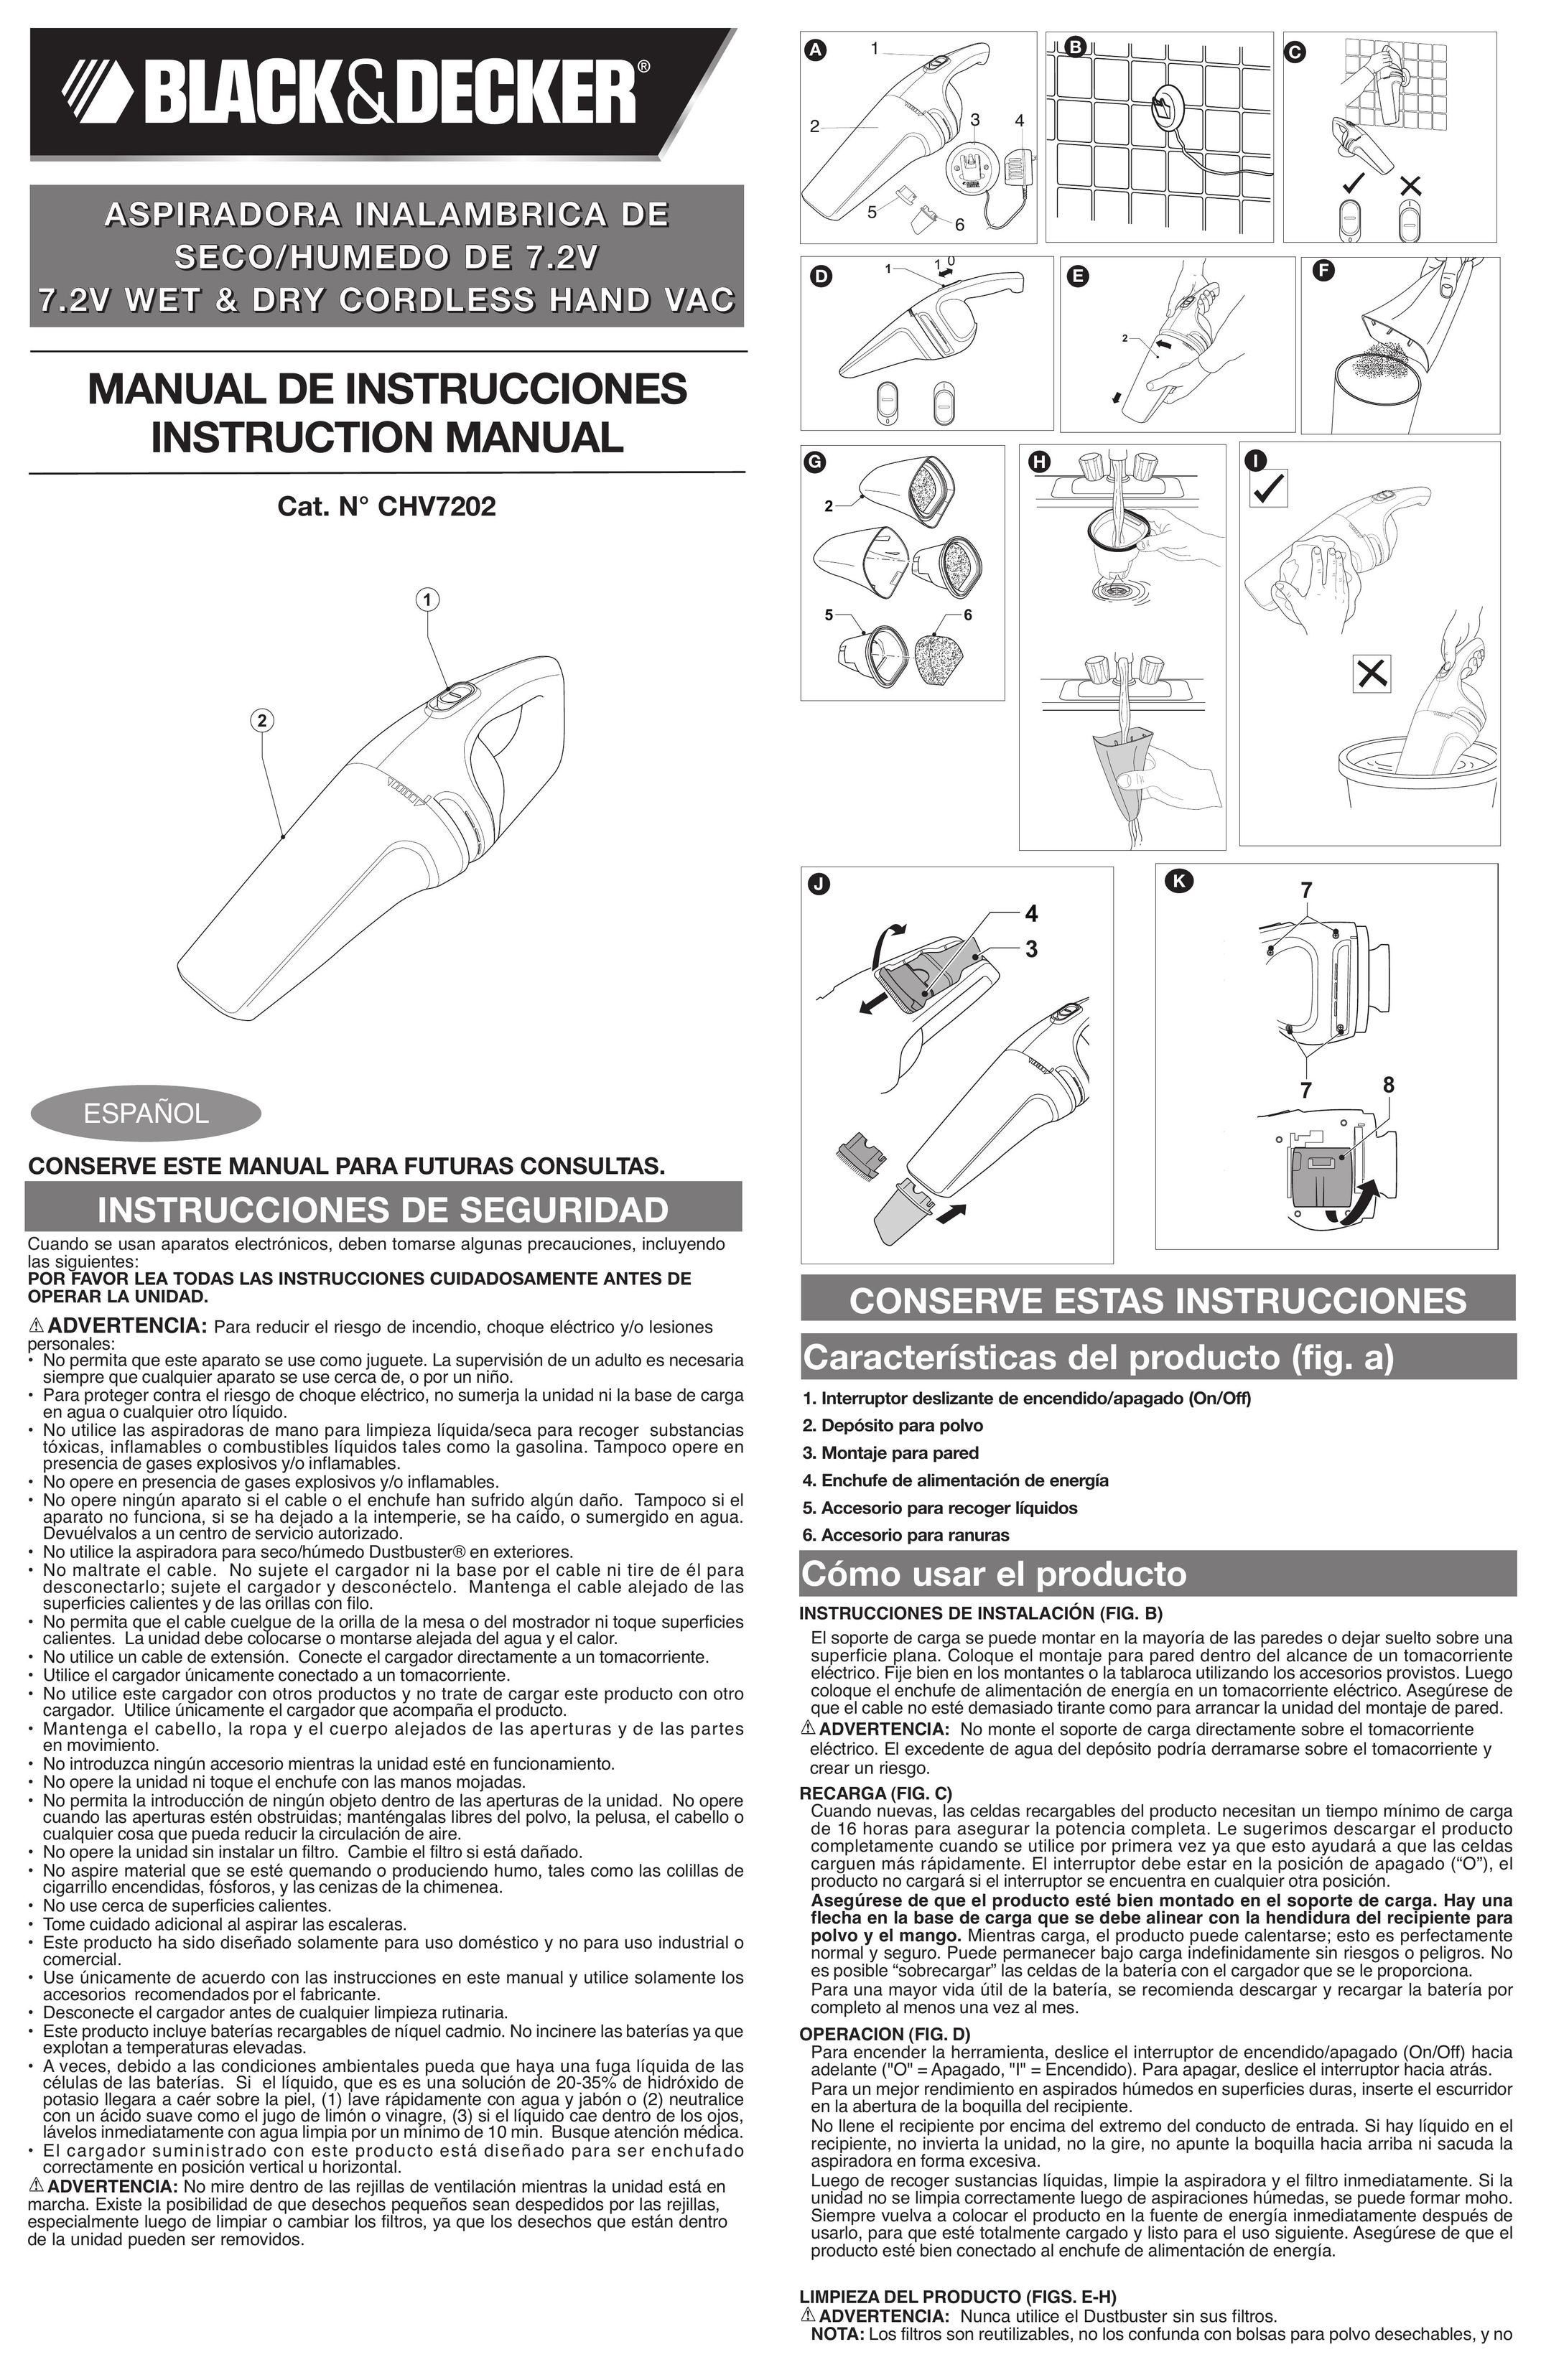 Black & Decker AA090020D Vacuum Cleaner User Manual